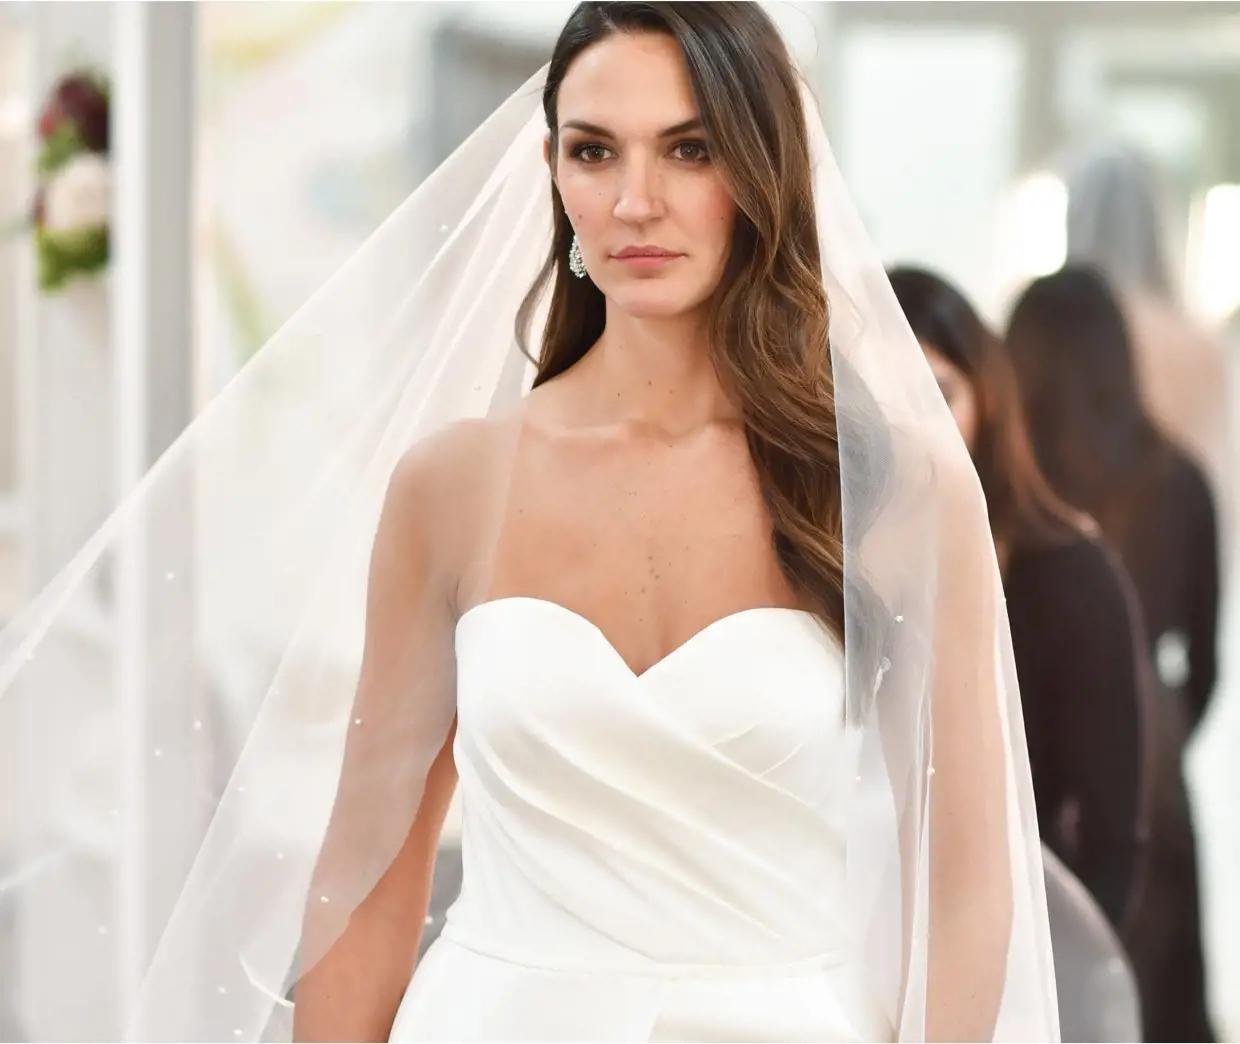 Photo of a real bride wearing bridal dress - Desktop image